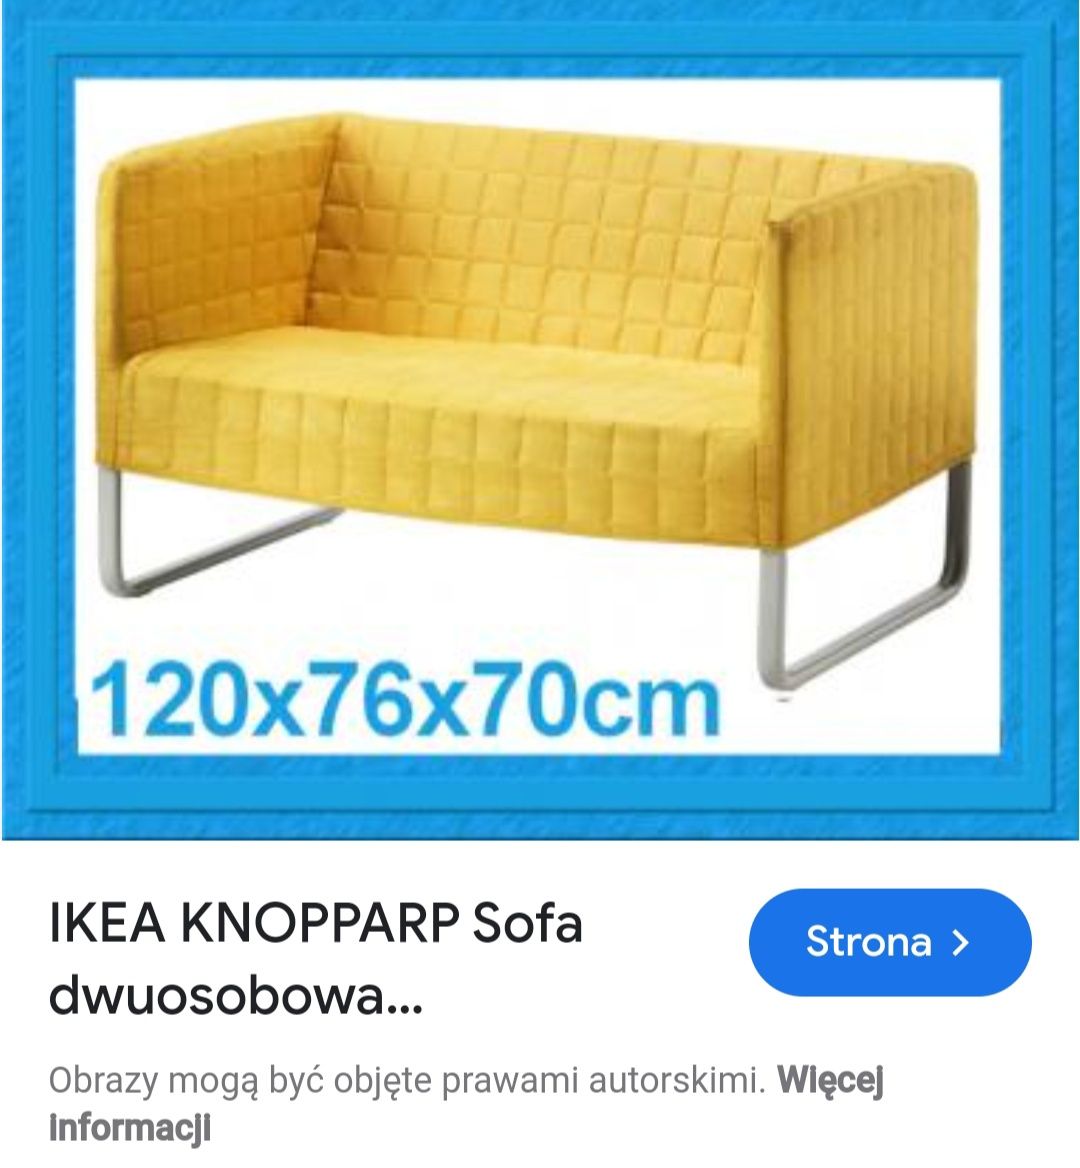 Sofa Ikea Knopparp